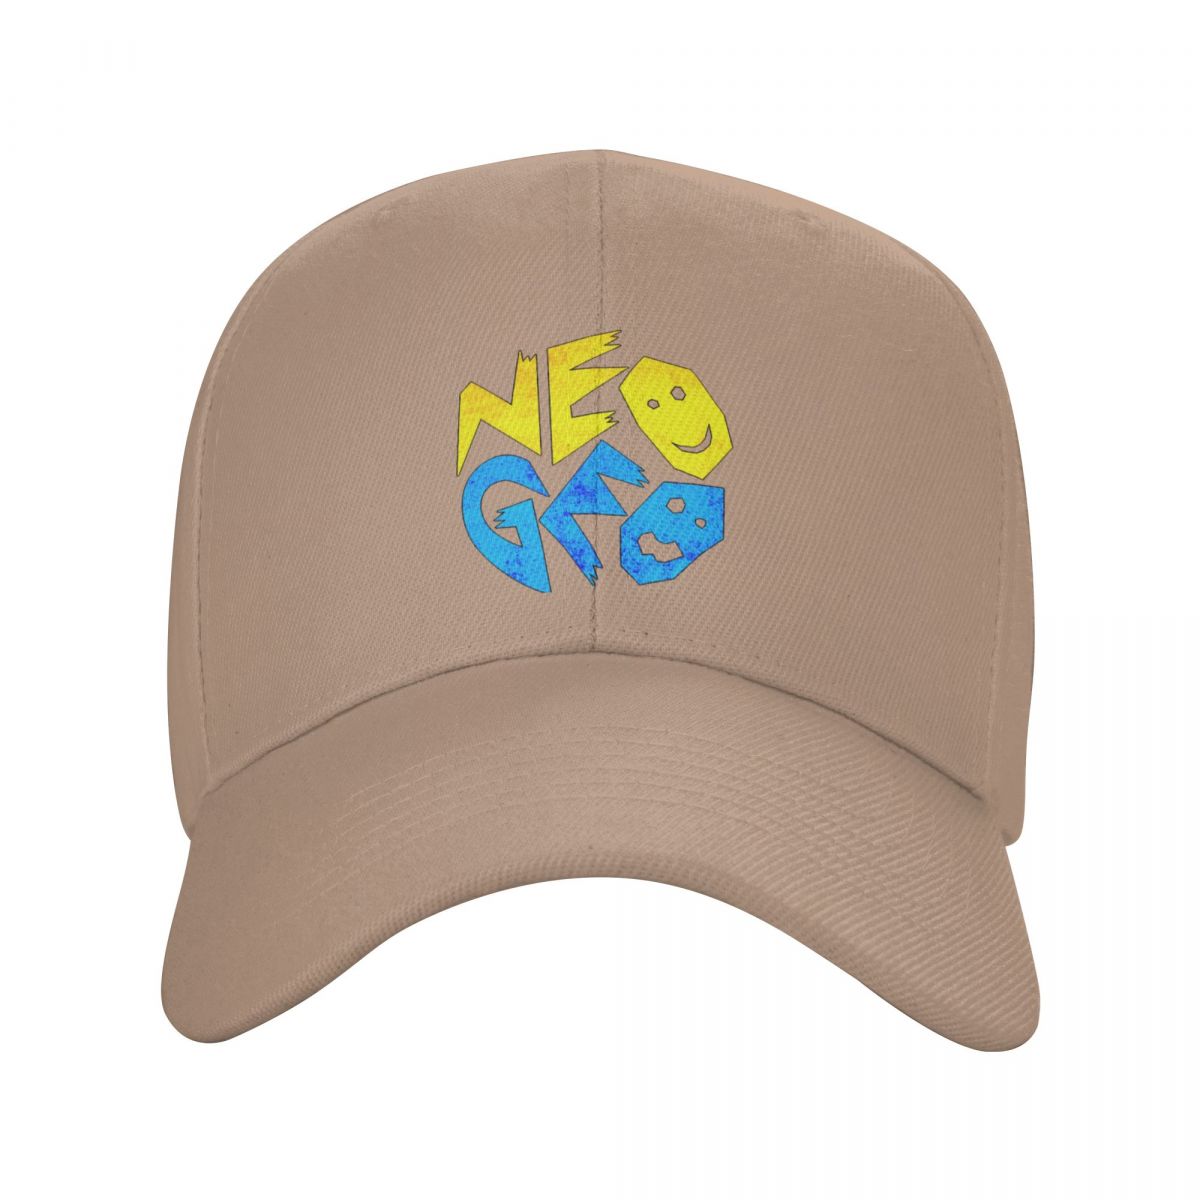 Neo Geo Arcade Game - Retro Gamer - Snapback Baseball Cap - Summer Hat For Men and Women-Khaki-Adjustable Cap-